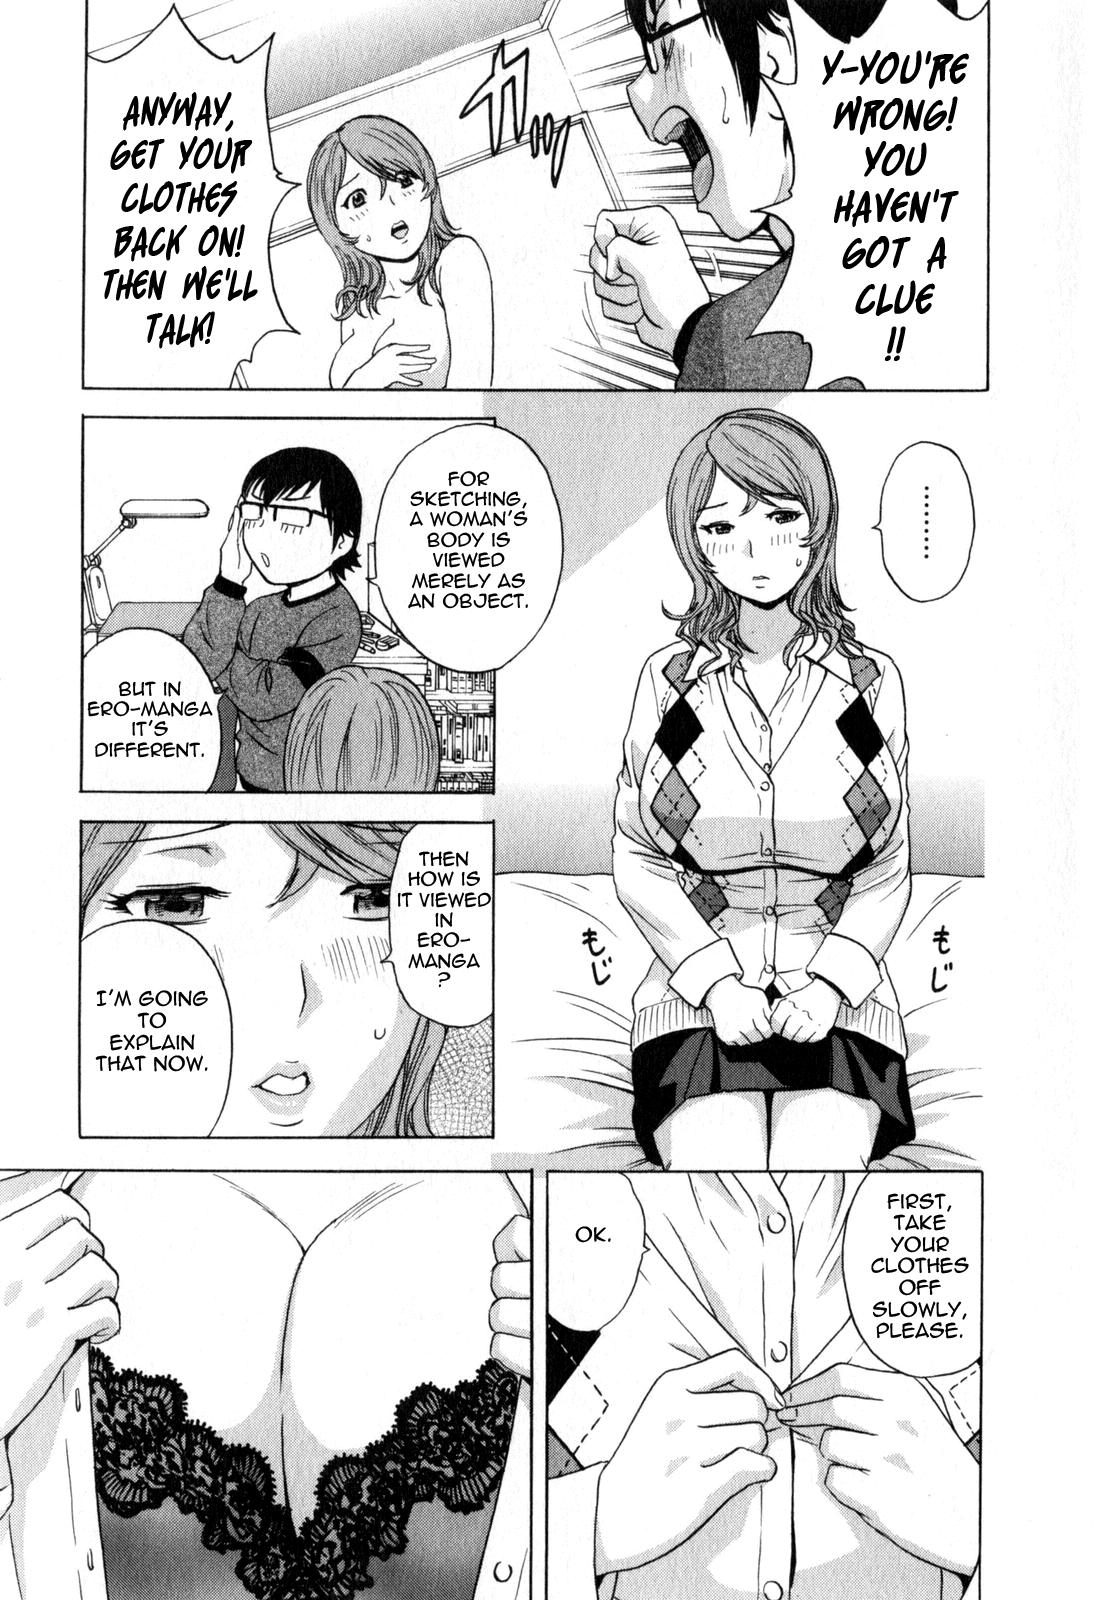 [Hidemaru] Life with Married Women Just Like a Manga 2 - Ch. 1-3 [English] {Tadanohito} 35